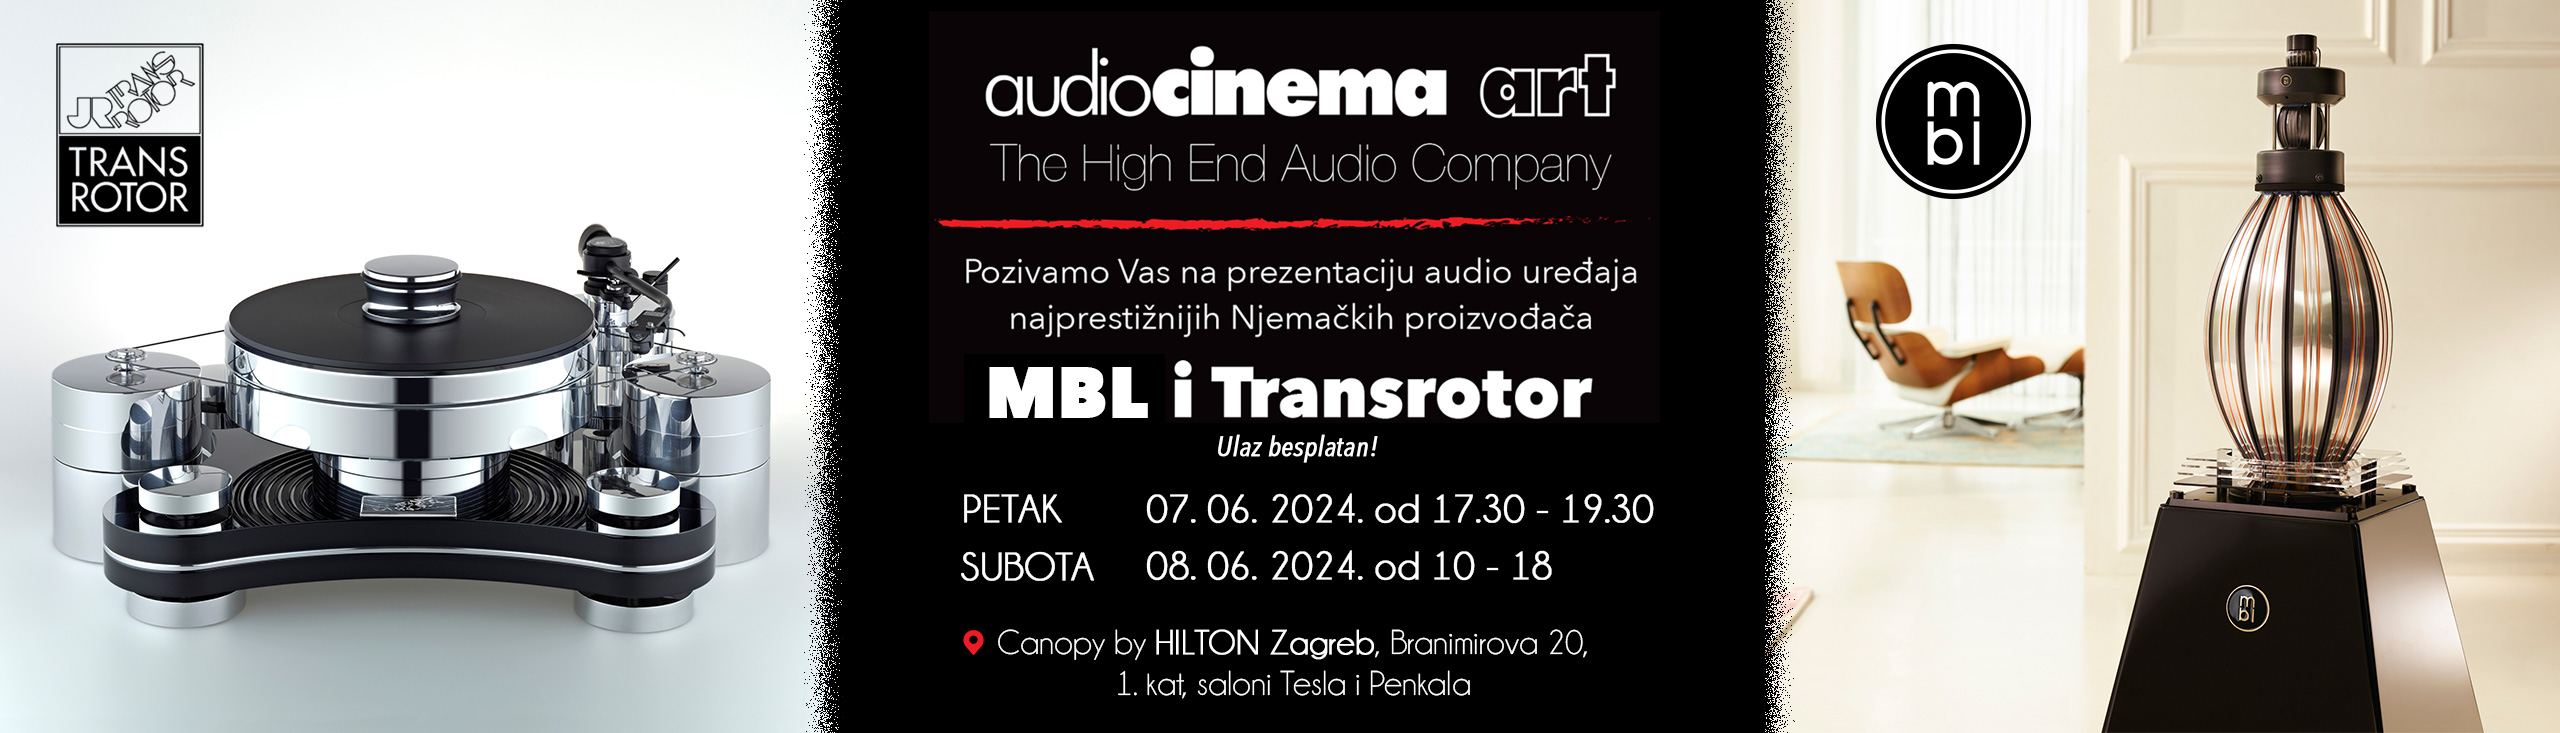 Prezentacija Audiocinema Art - MBL i Transrotor, Hilton, Zagreb